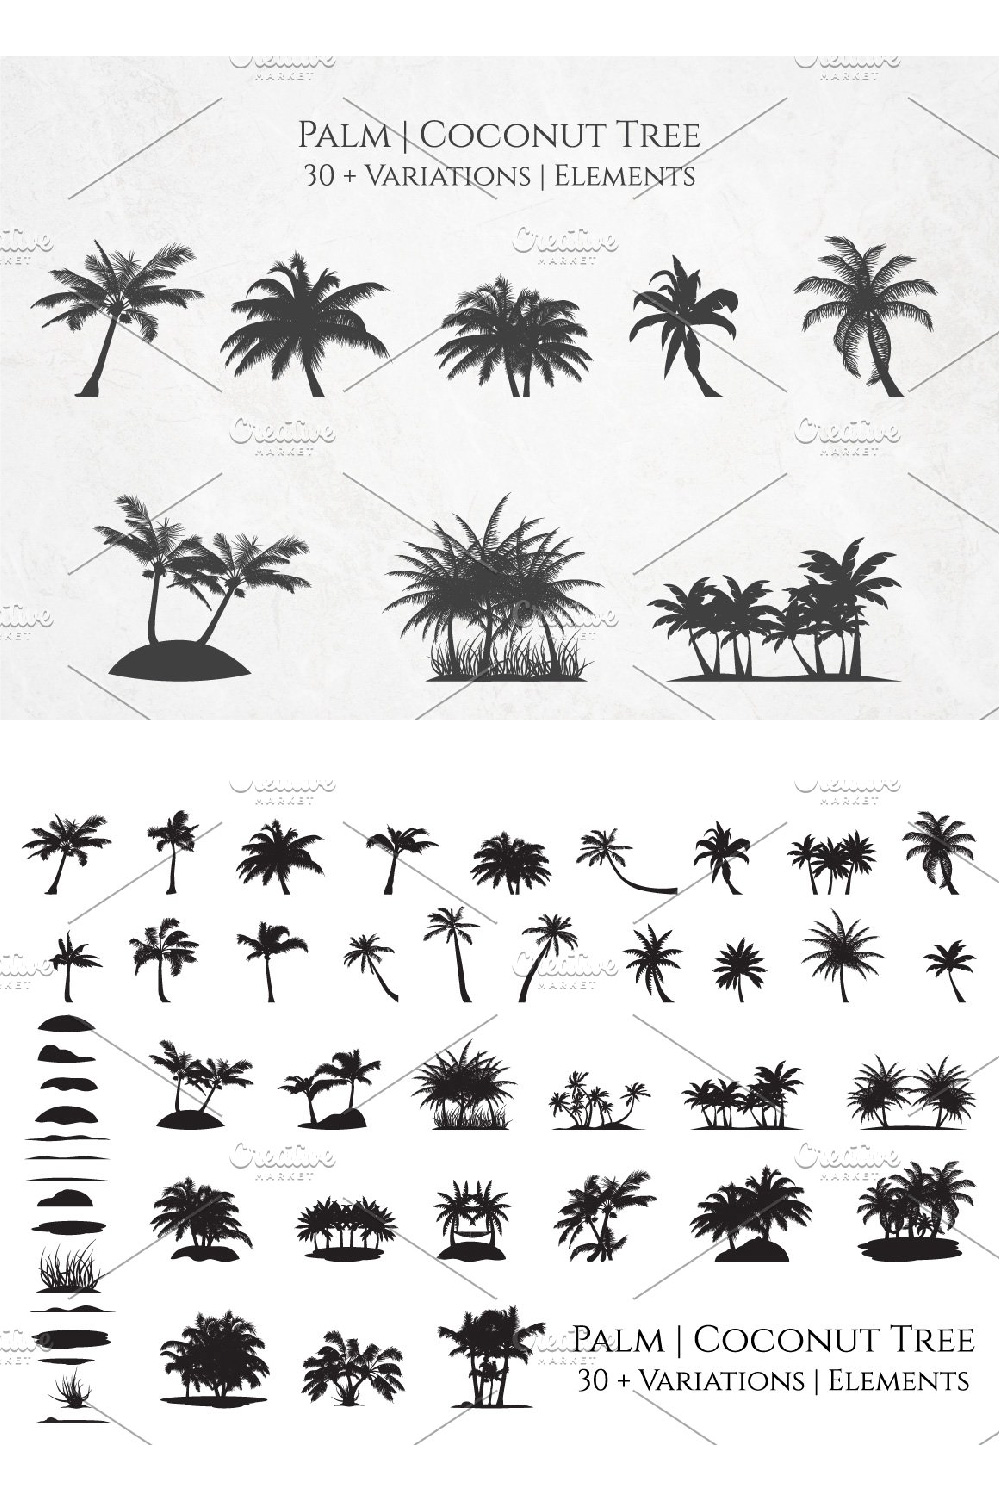 Black coconut palm trees.